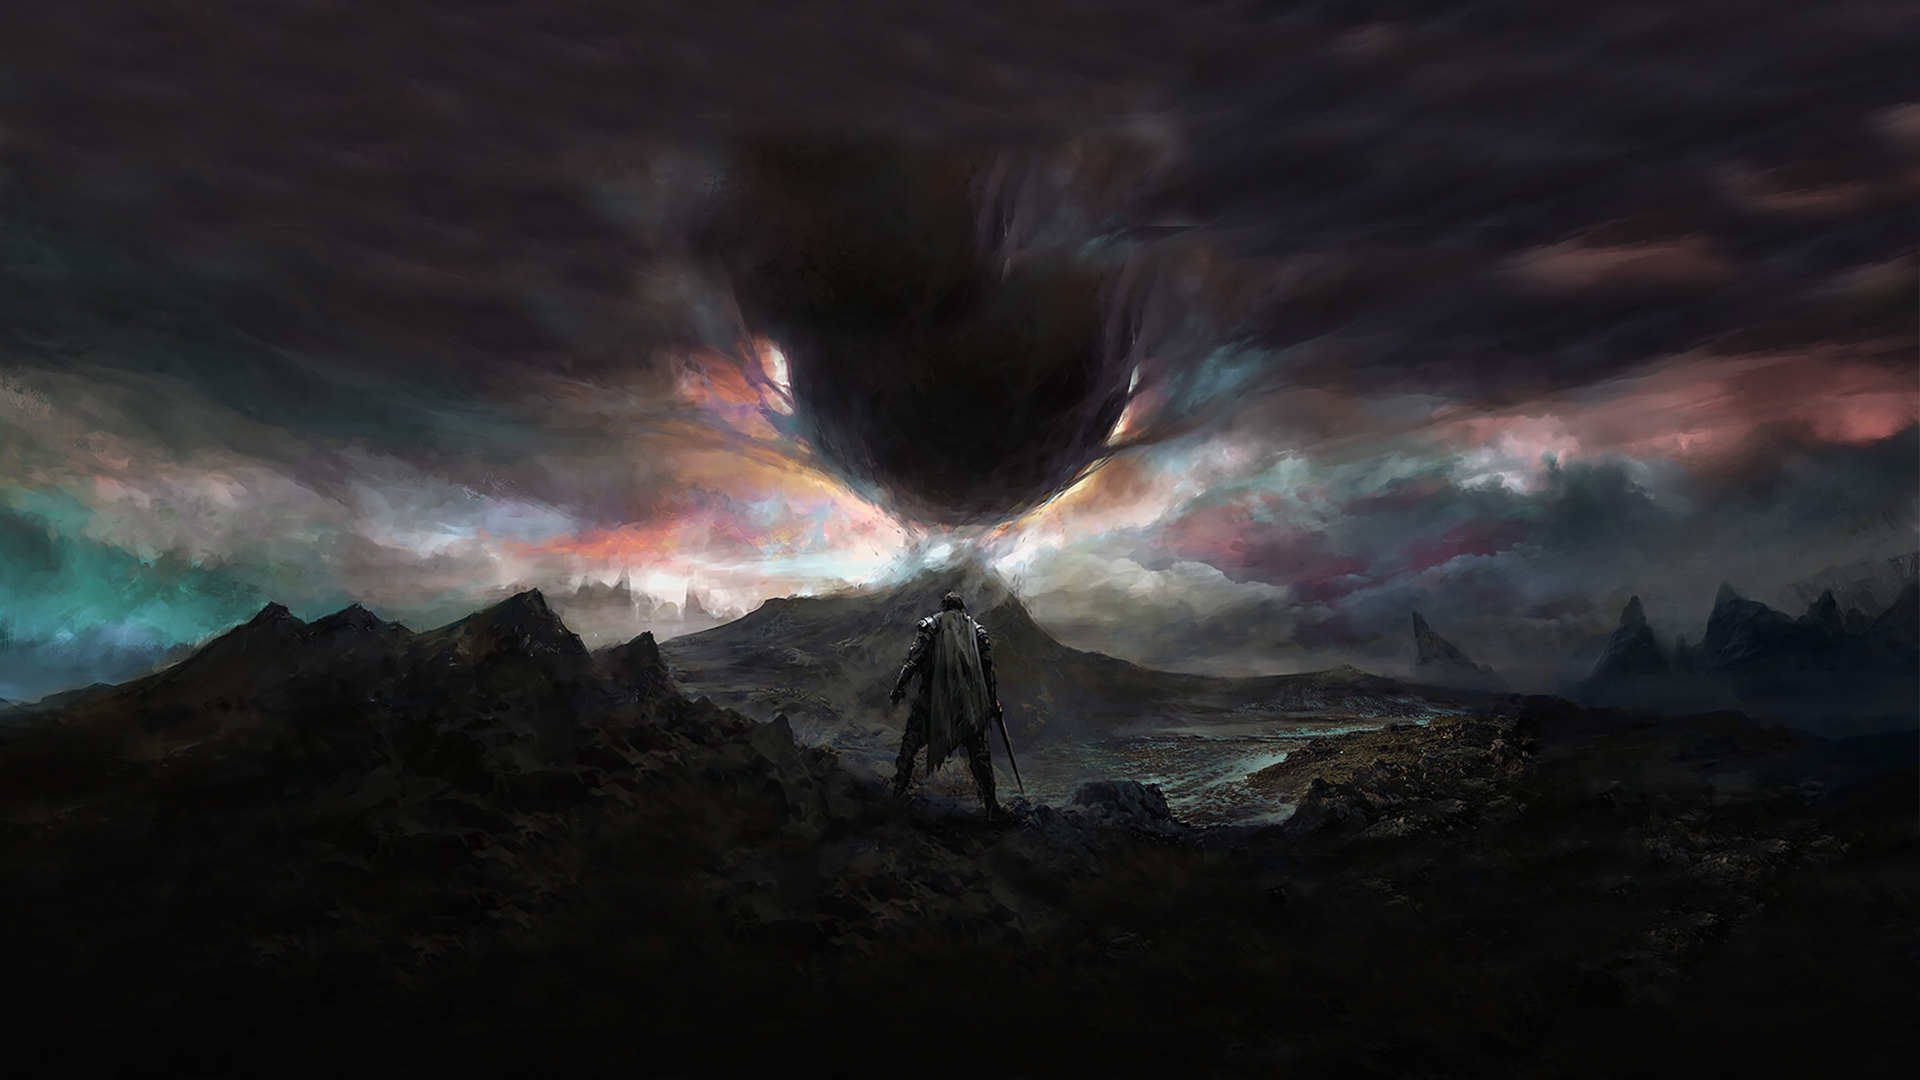 Dark Fantasy Clouds Post Apocalypse Knight Sword Landscape Digital Art Chris Cold ArtStation Concept 1920x1080